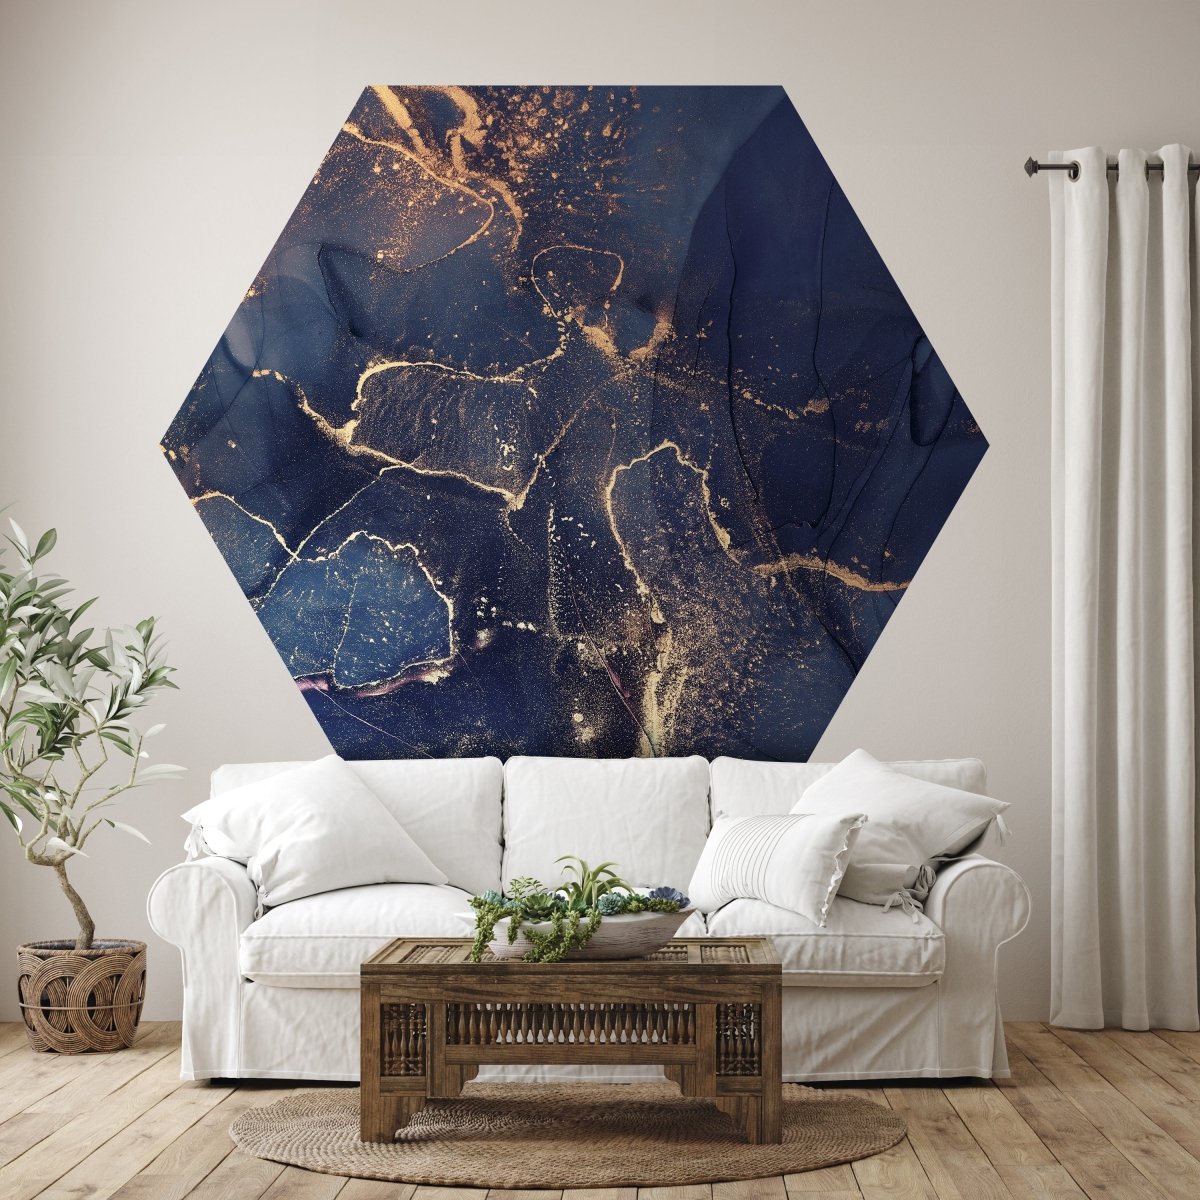 Hexagon-Fototapete blaue Marmoroptik M0035 - Bild 1